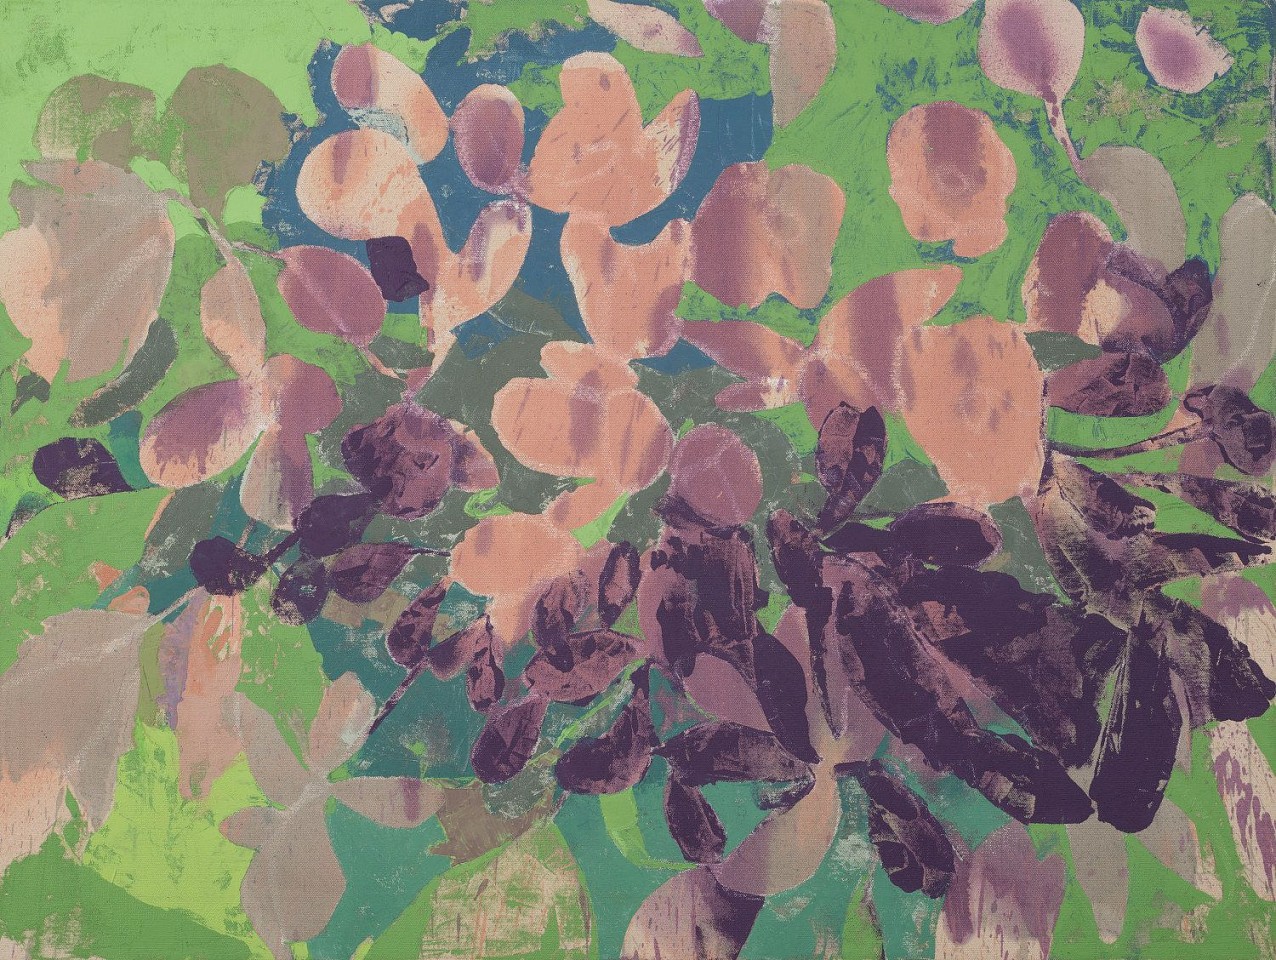 Eric Dever, Hellebores-Lenten Rose | SOLD, 2021
Oil on canvas, 36 x 48 in. (91.4 x 121.9 cm)
DEV-00207